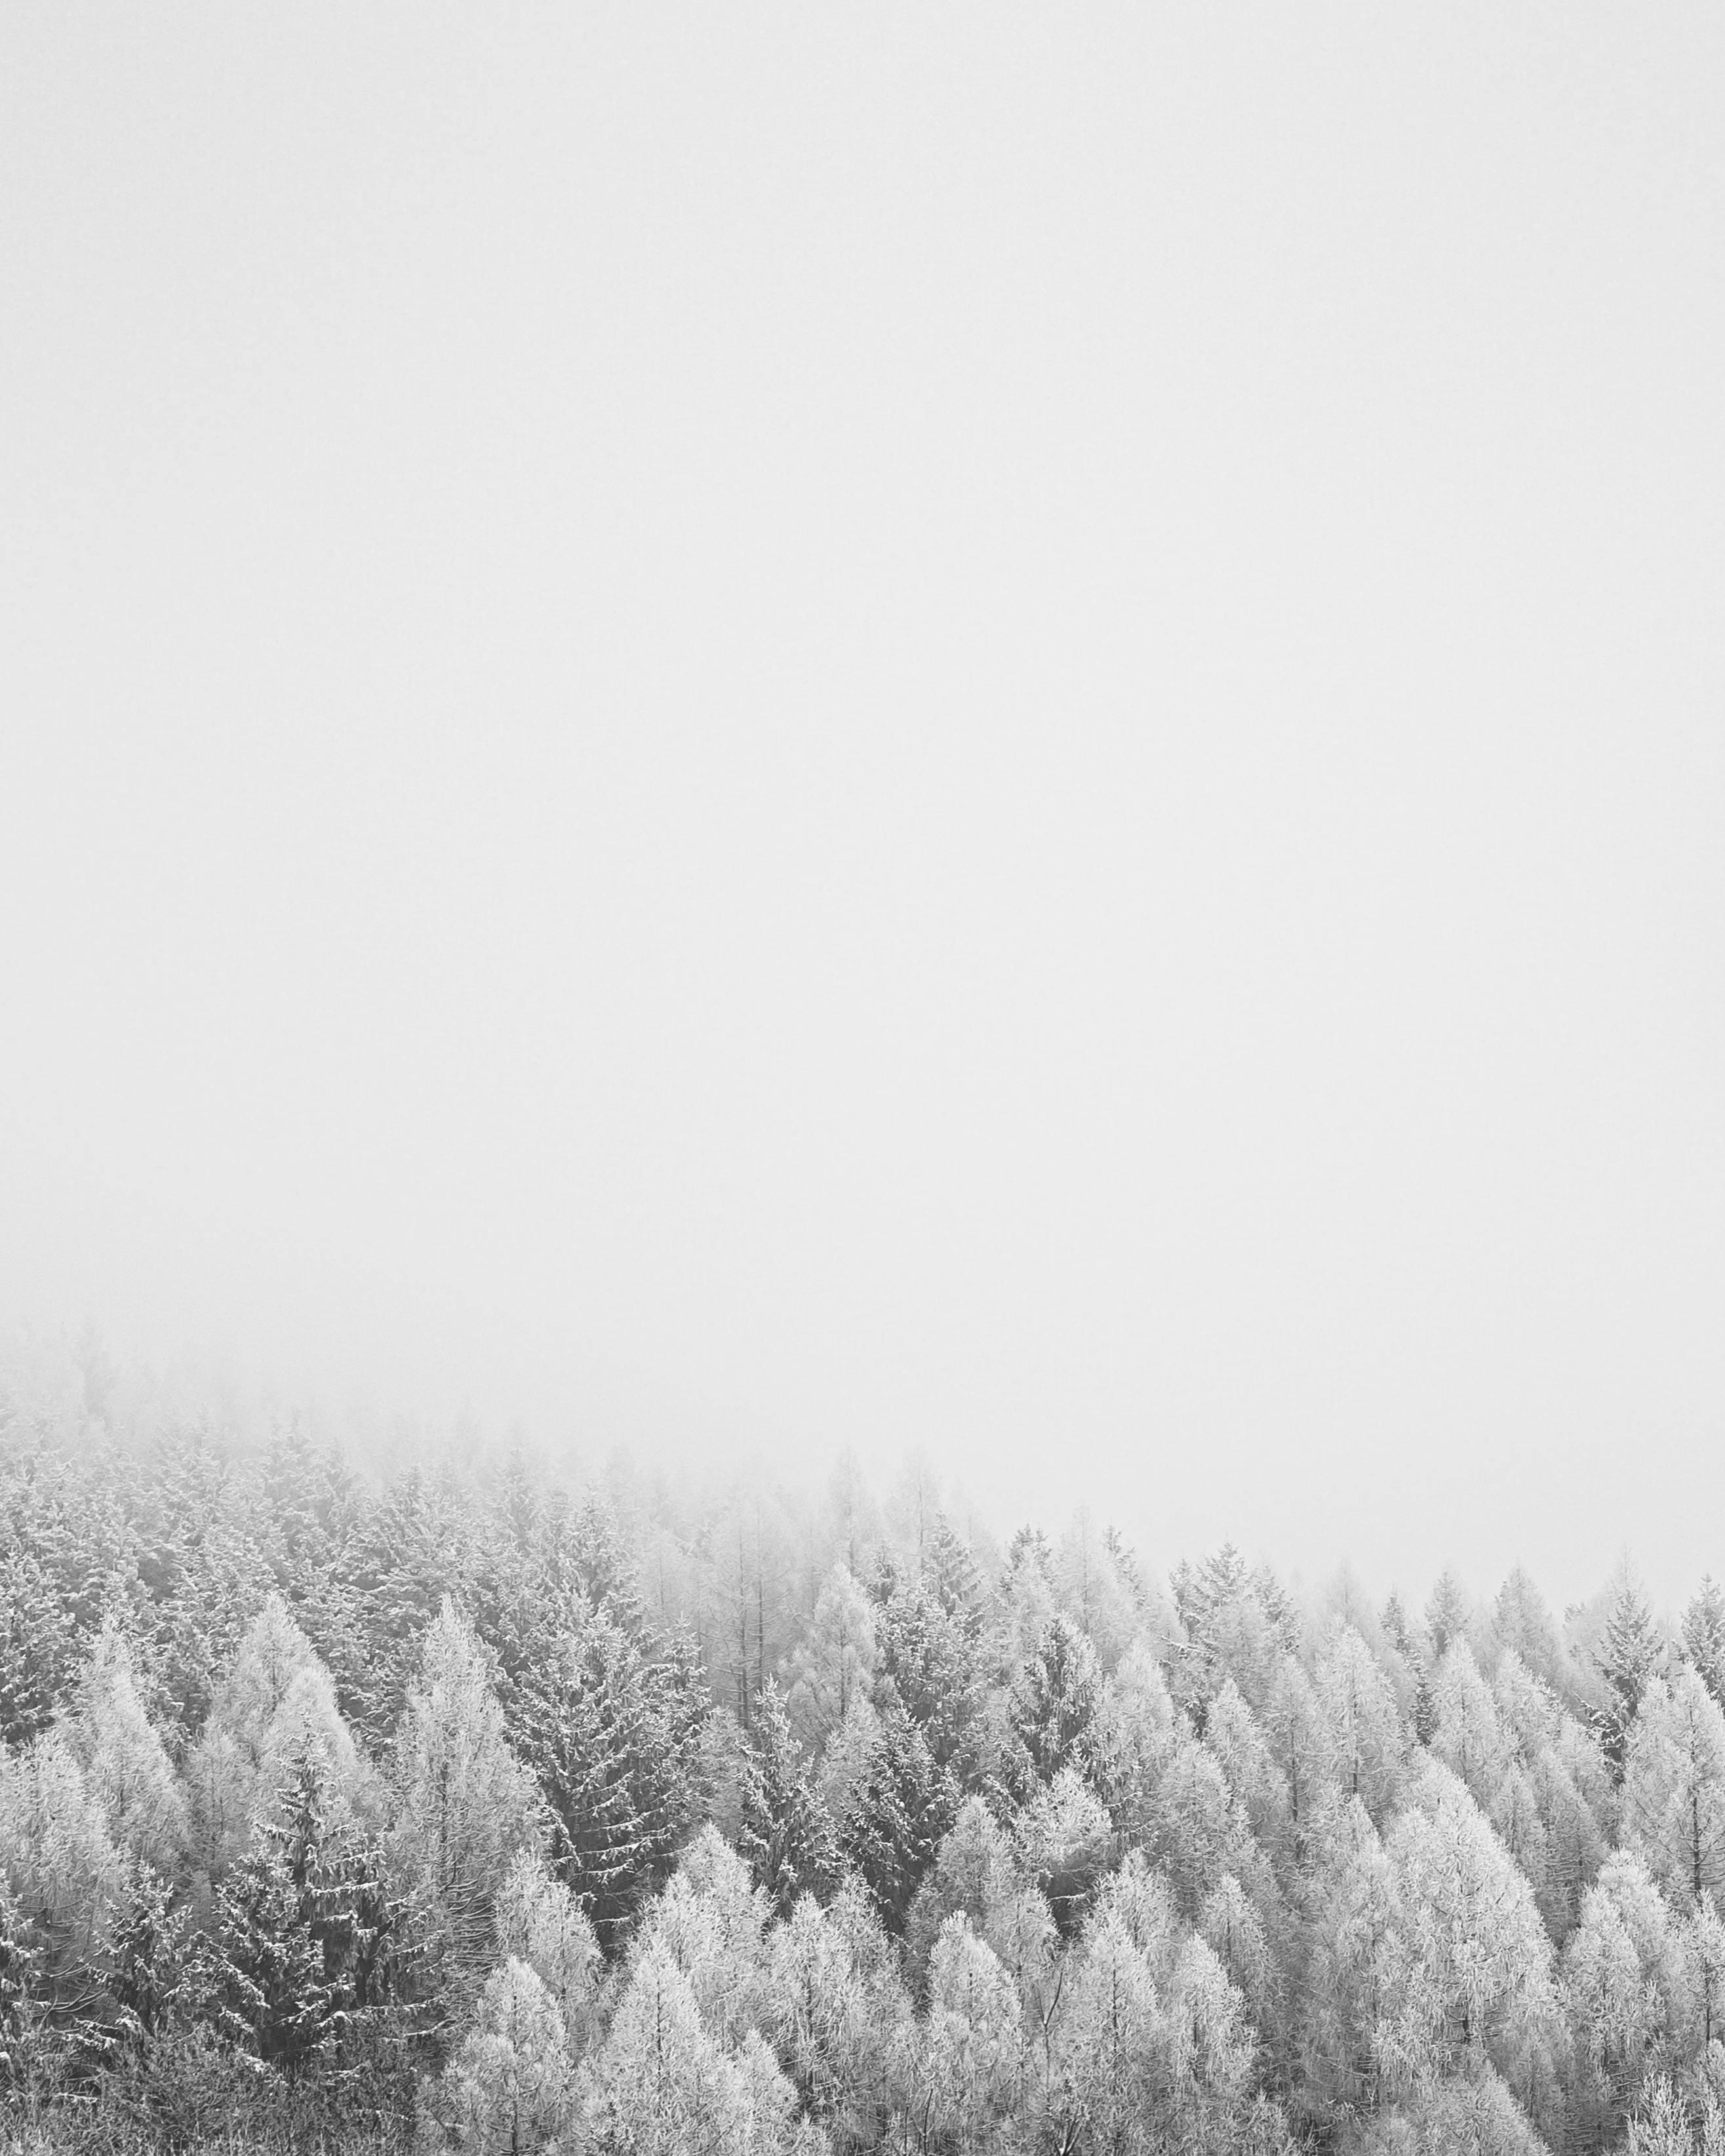 20+ Free Winter Background Photos